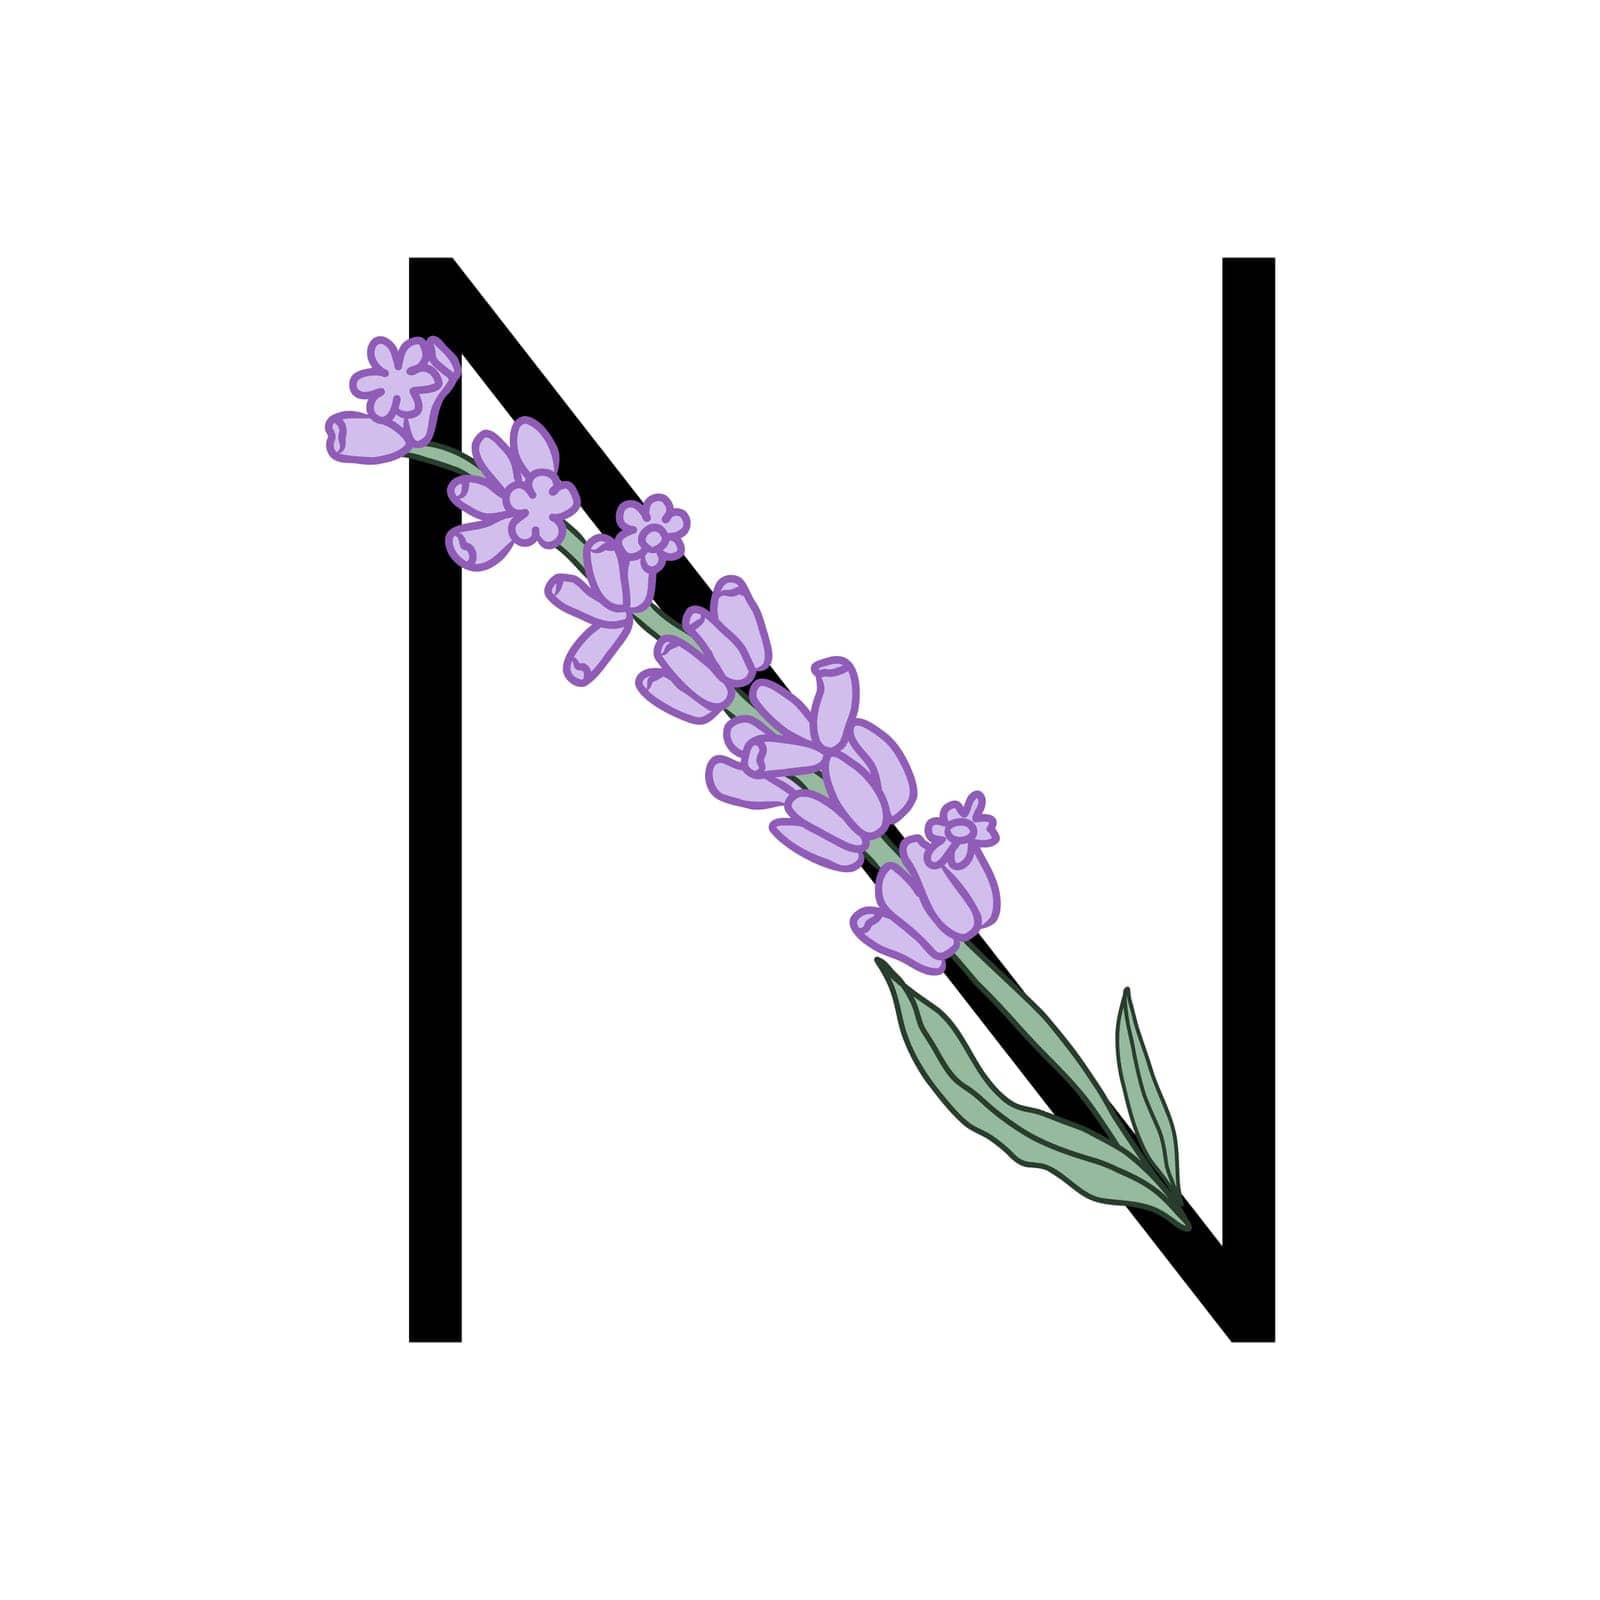 Lavender blossom violet little flower alphabet for design of card or invitation. Vector illustrations, isolated on white background for summer floral gesign. by MintanArt